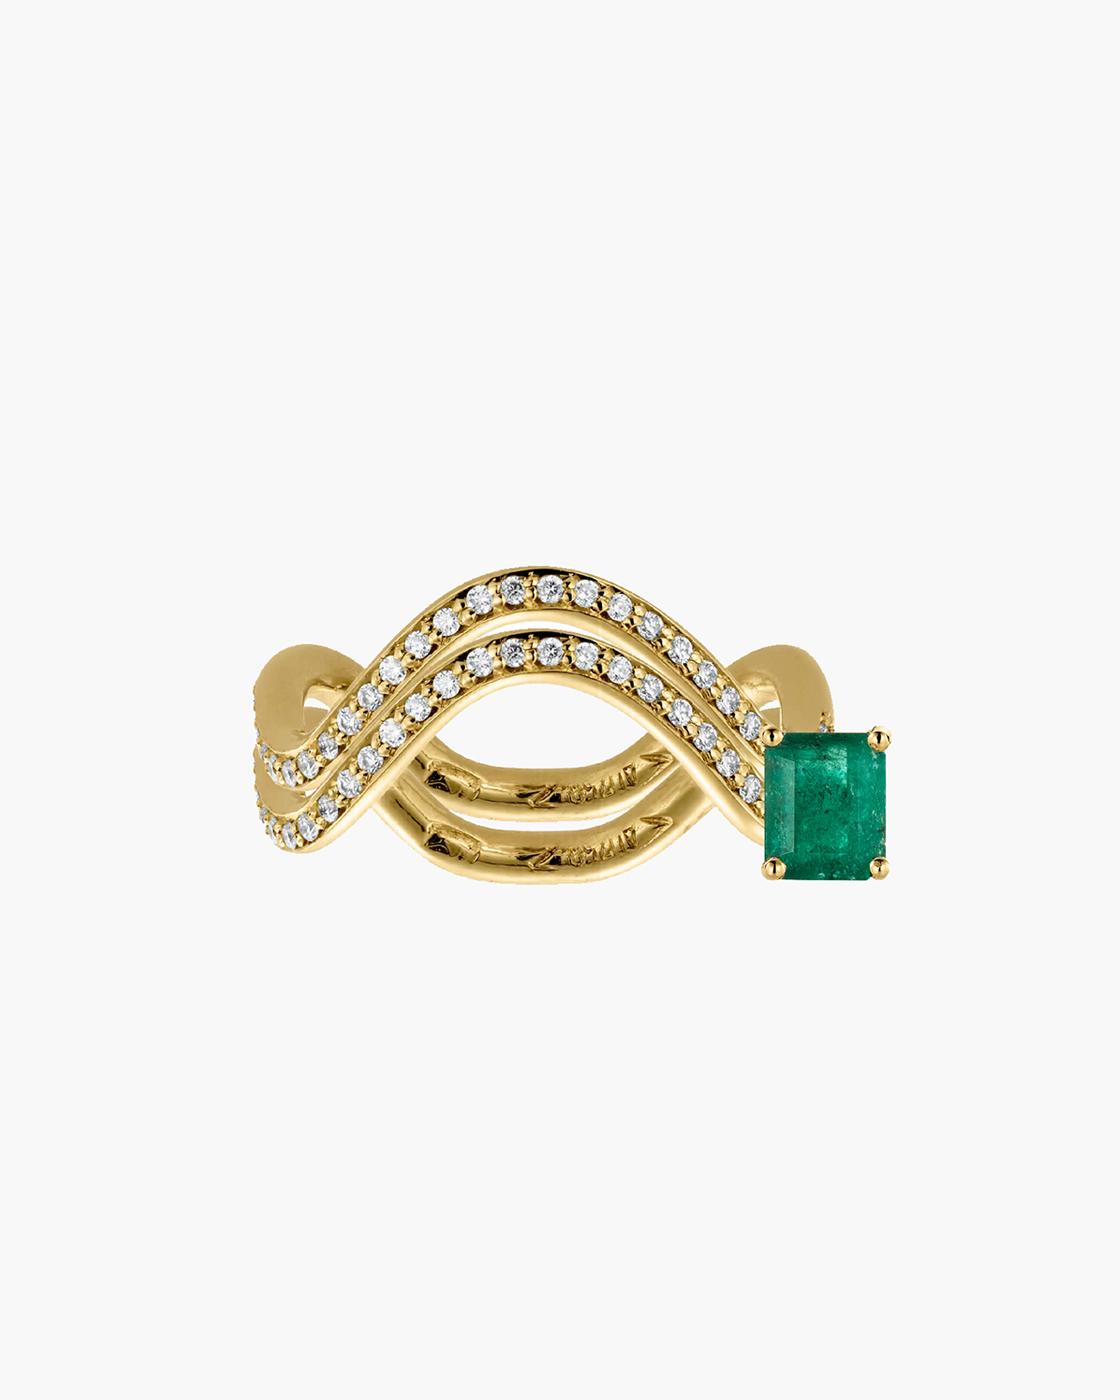 Double Petite Comete Yellow Gold Emerald And Diamond Ring